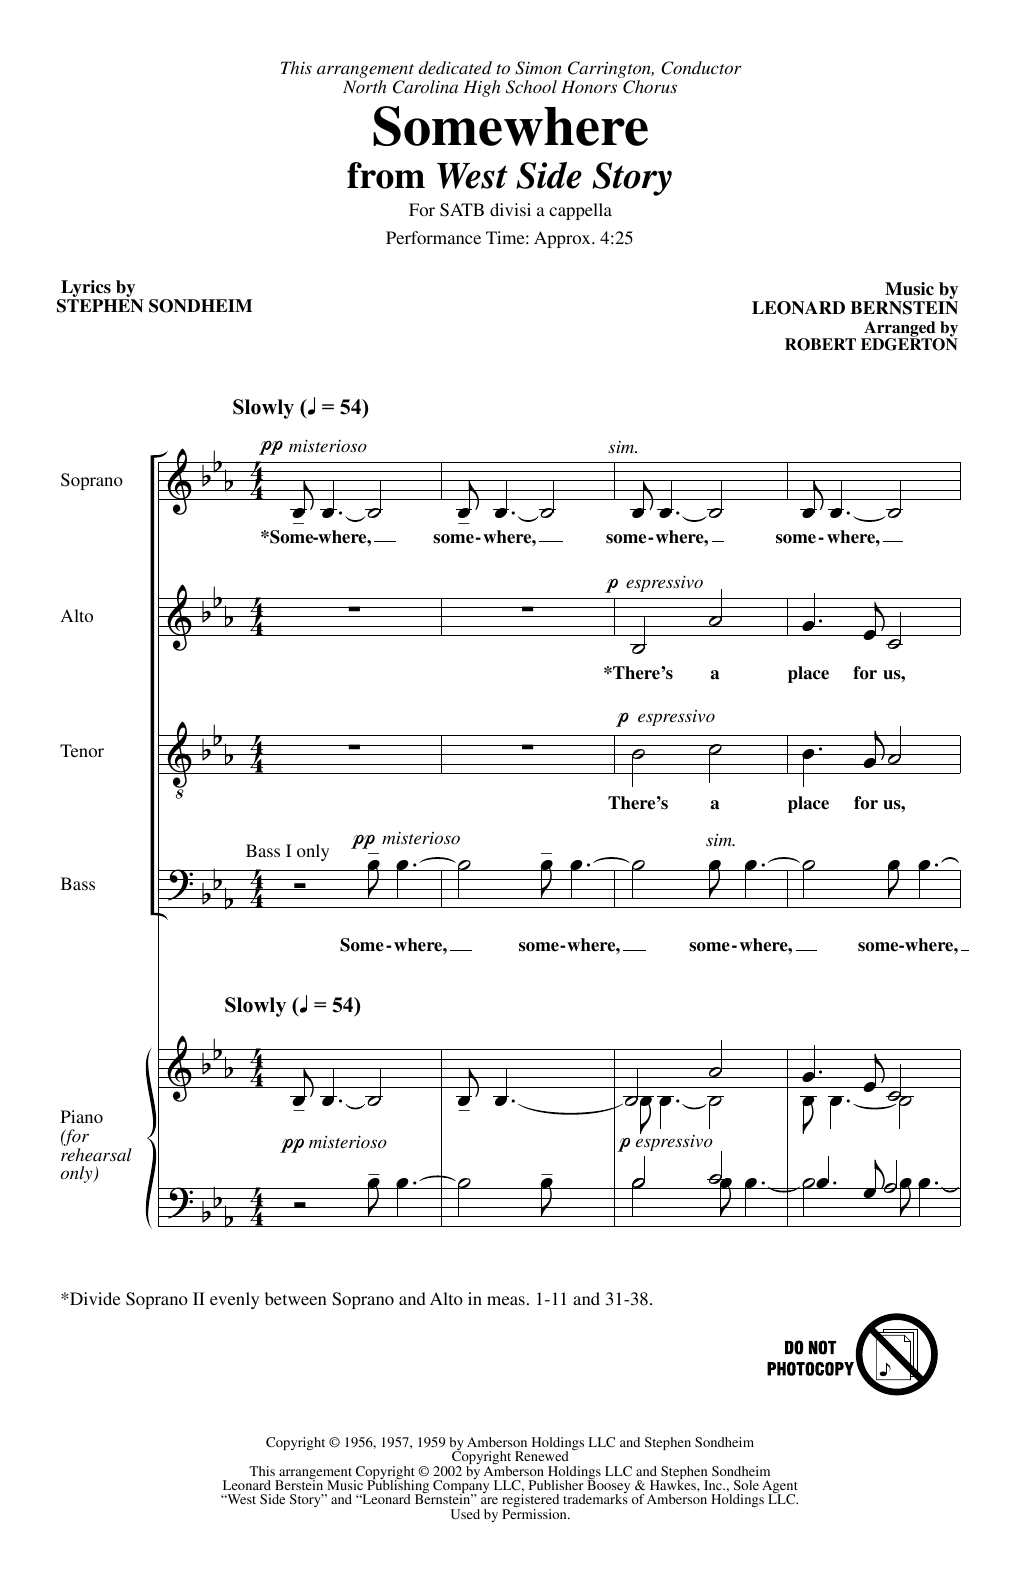 Leonard Bernstein Somewhere (from West Side Story) (arr. Robert Edgerton) Sheet Music Notes & Chords for SATB Choir - Download or Print PDF